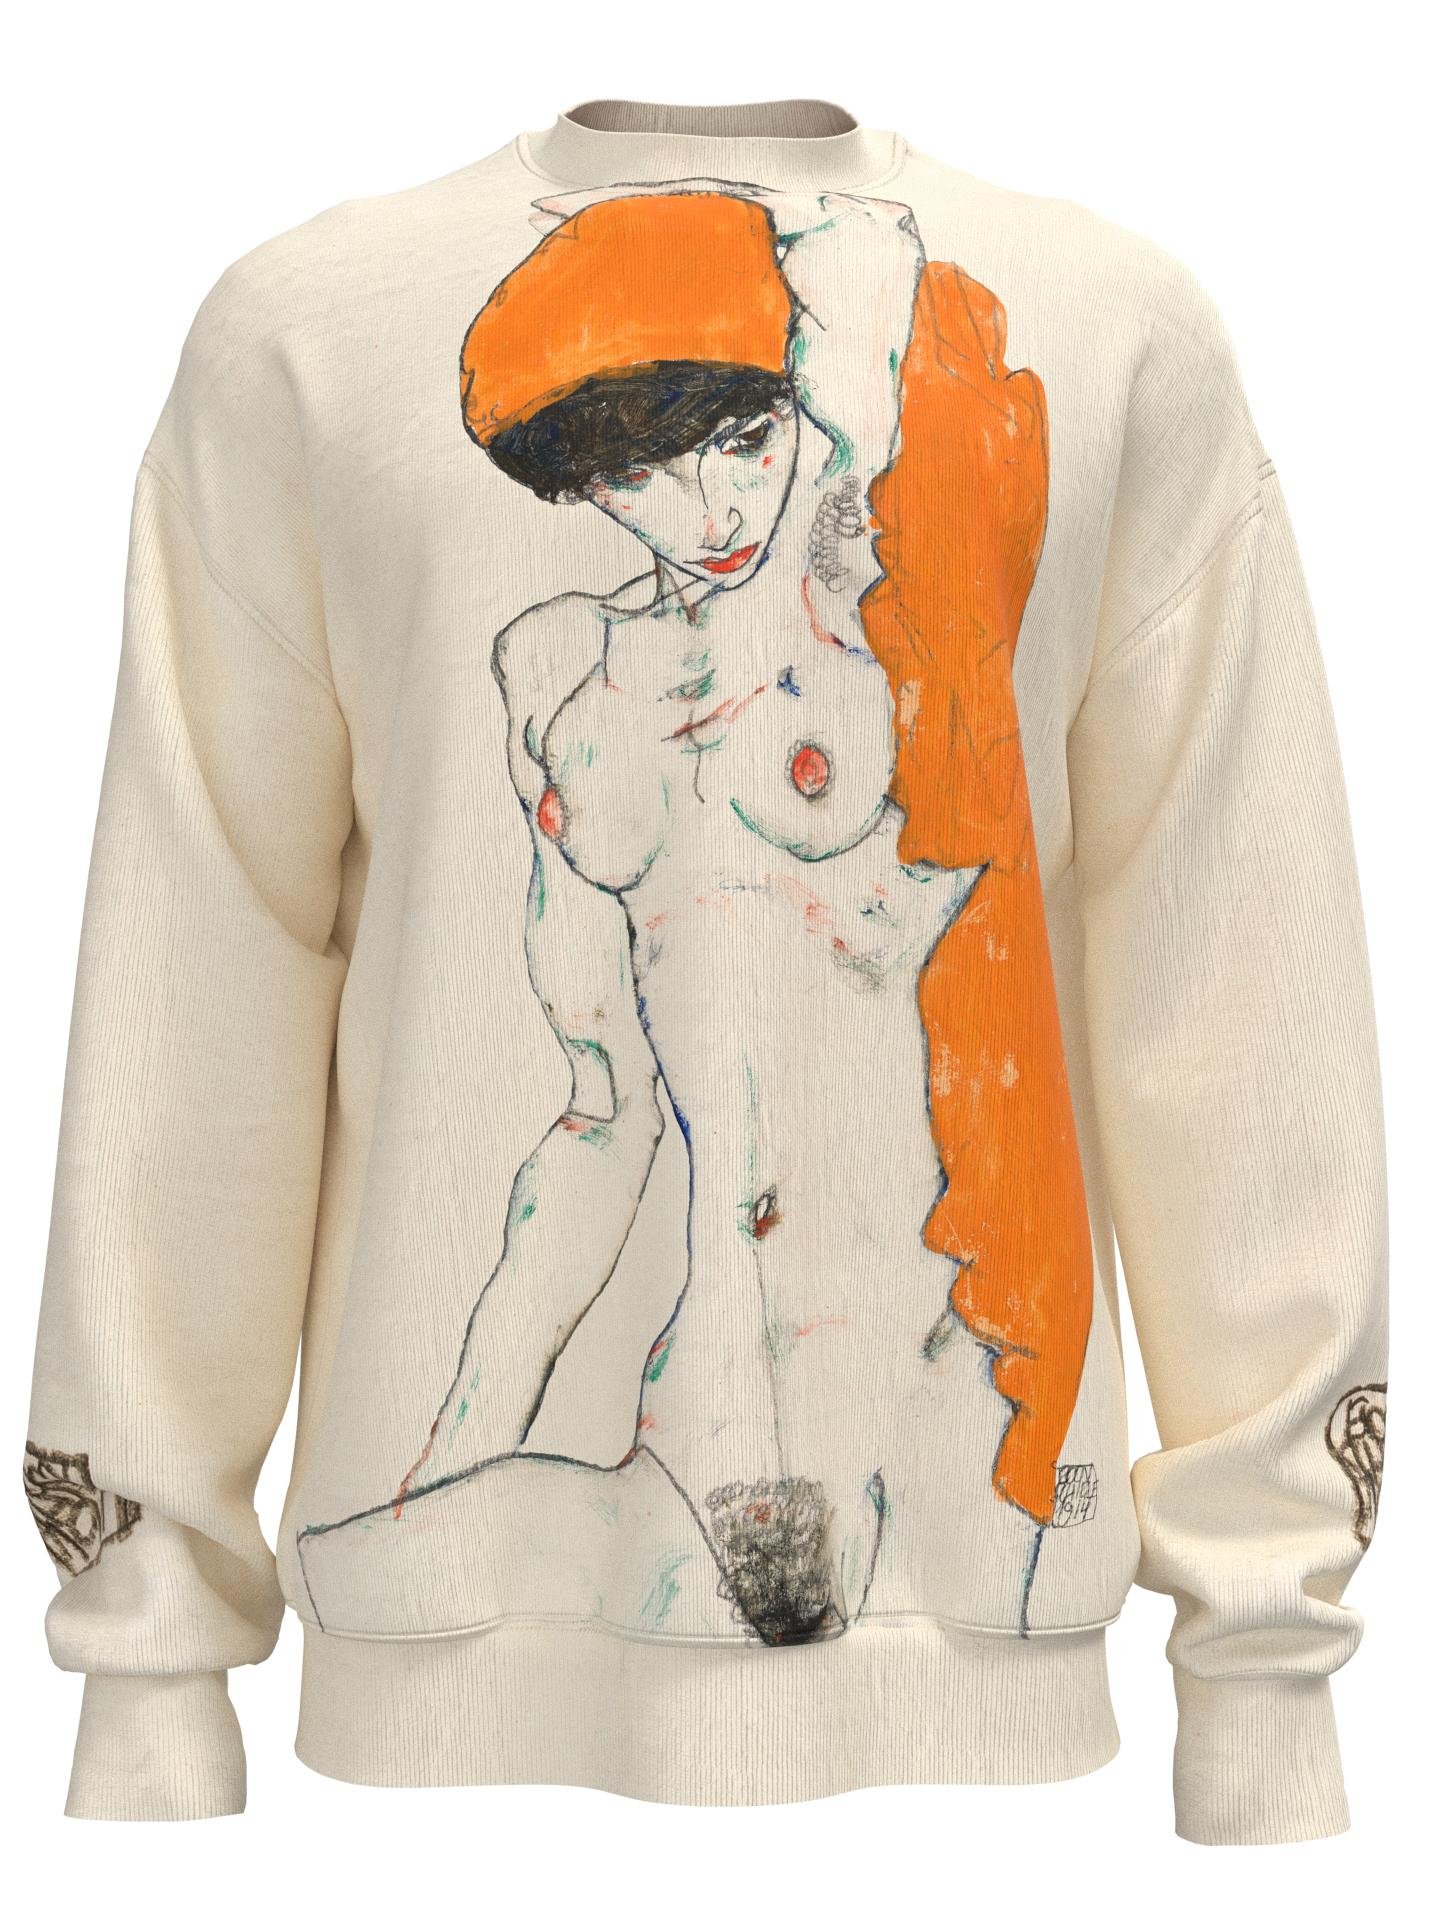 Sweatshirt - Standing Nude with Orange Drapery by DRESSX